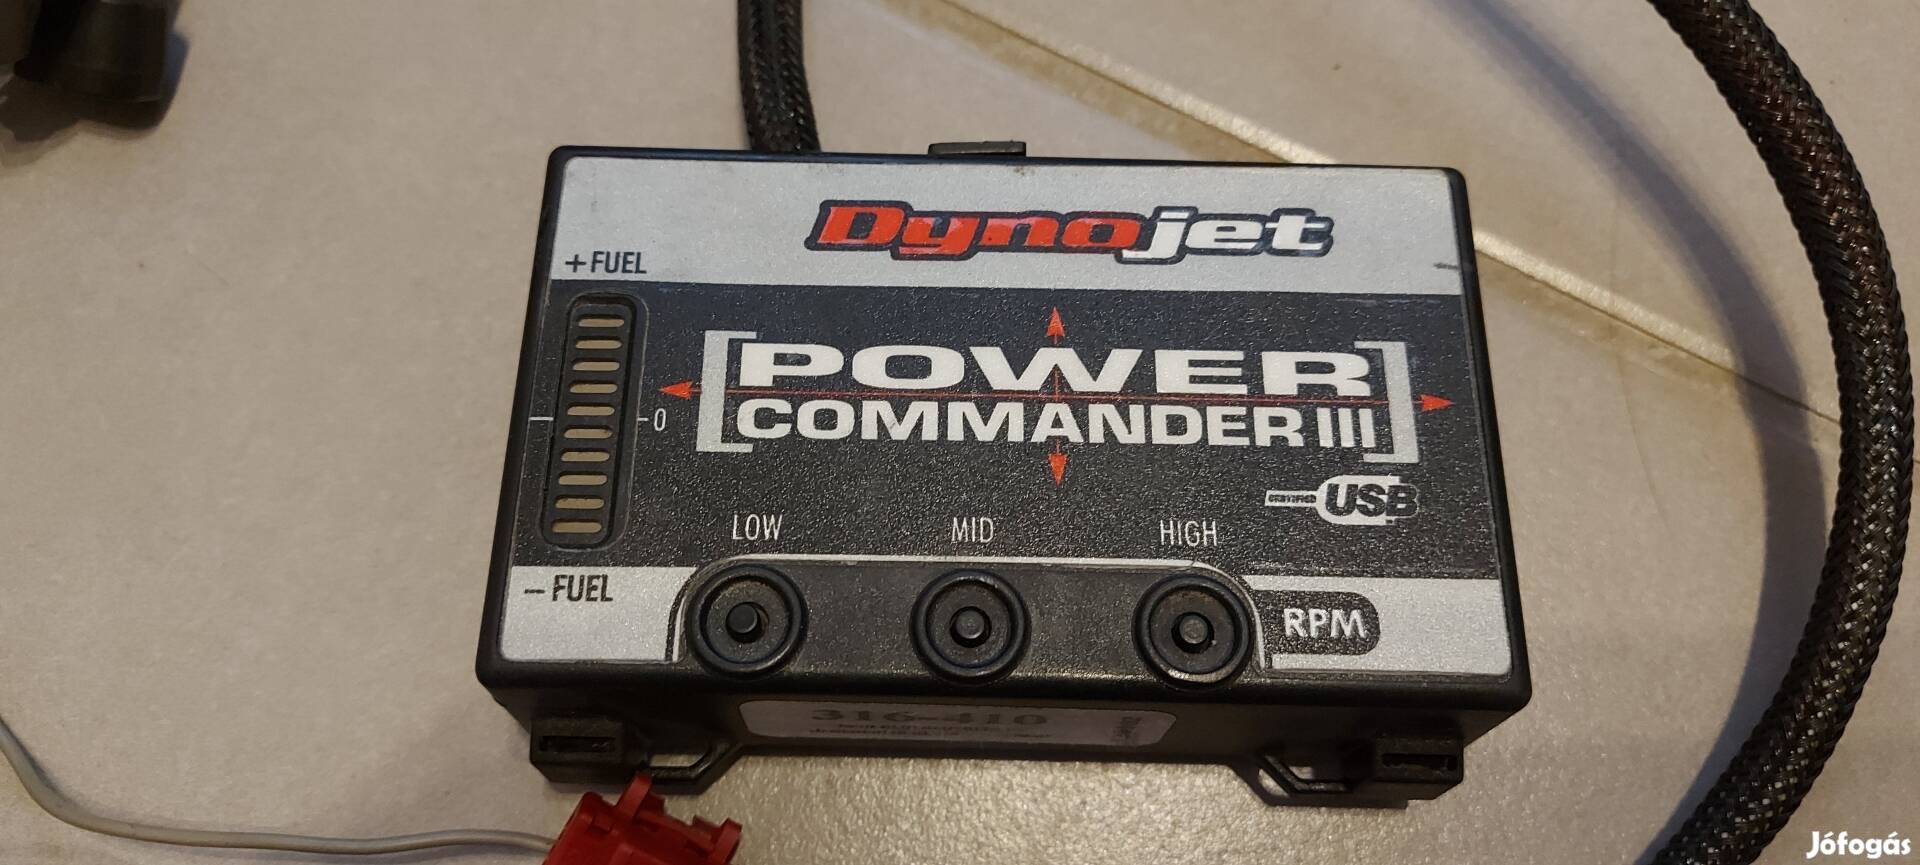 Dinojet Power Commander 3 gsxr